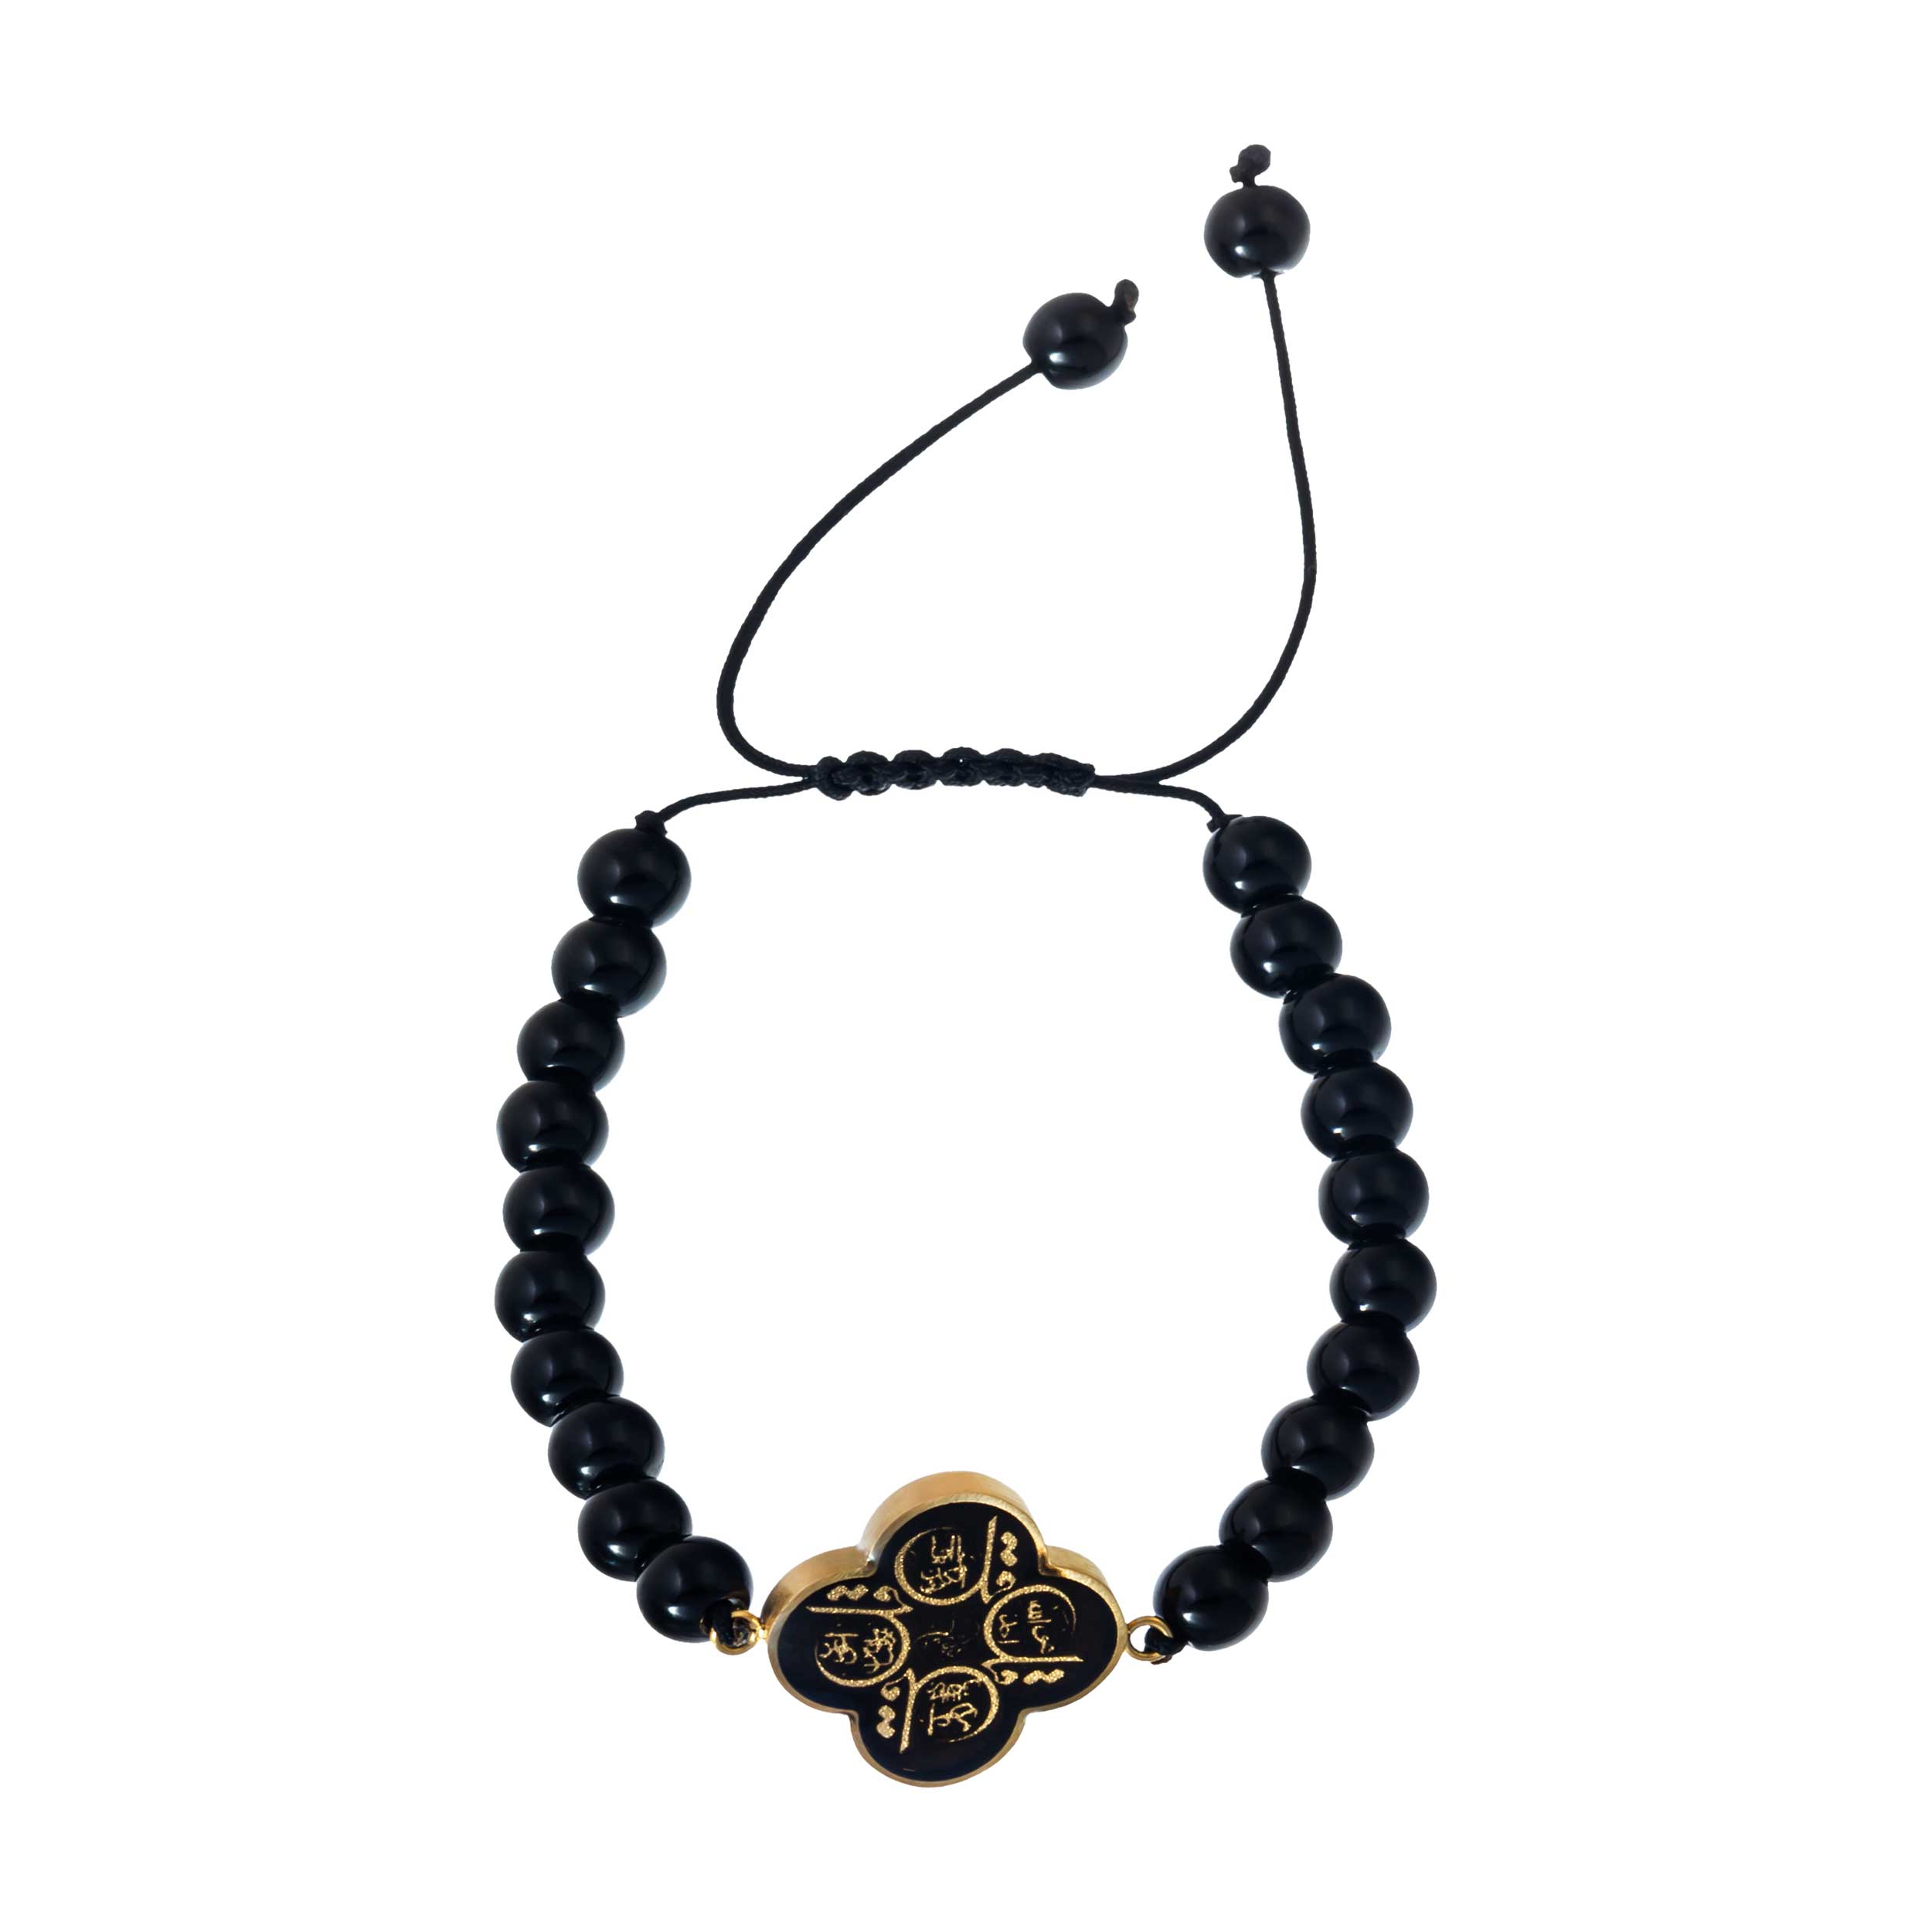 Onyx bracelet and 24 carat gold leaf, four-piece design